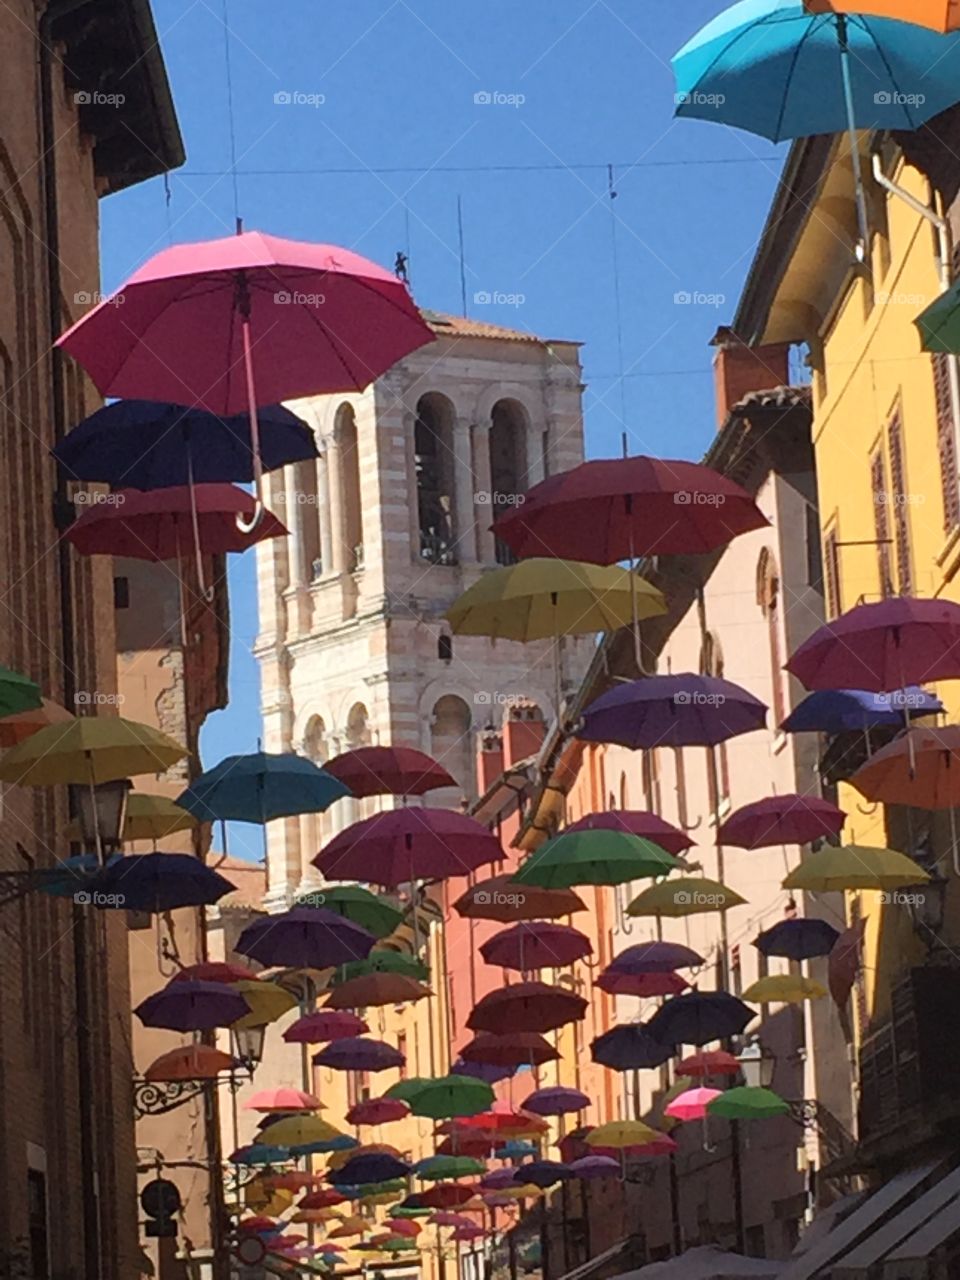 Ferrara street view with umbrella